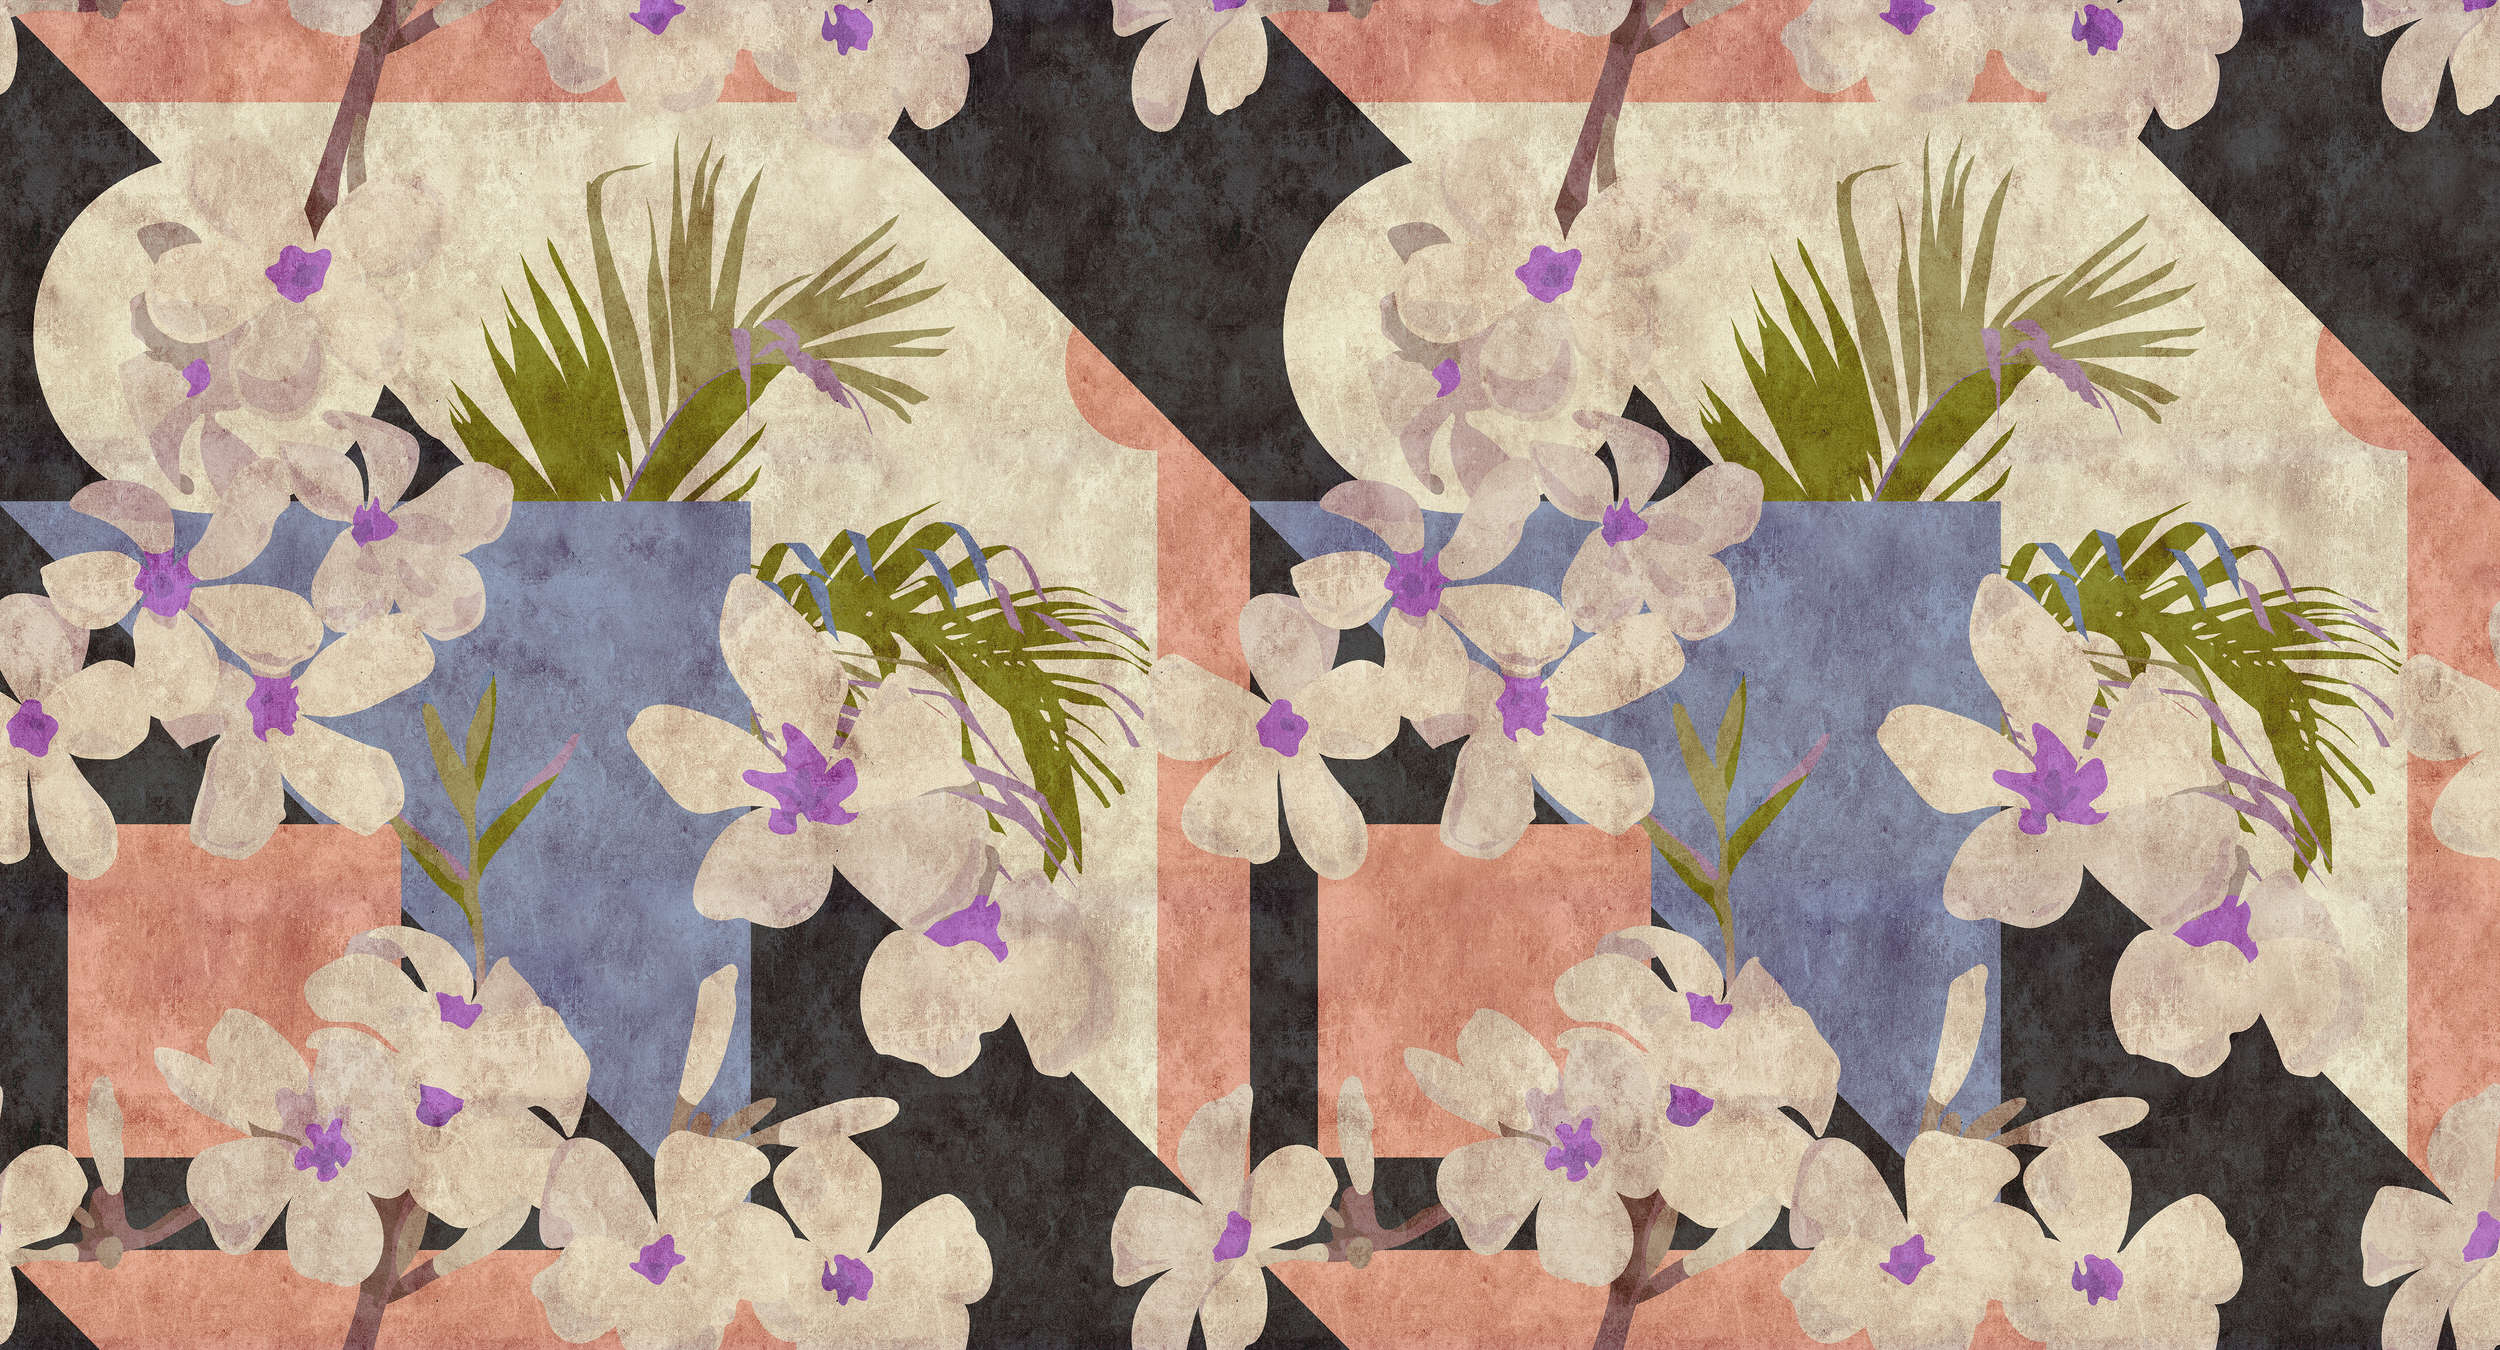             Vintage bloom2 - vintage digital print wallpaper, blotting paper structure with floral pattern - beige, blue | structure non-woven
        